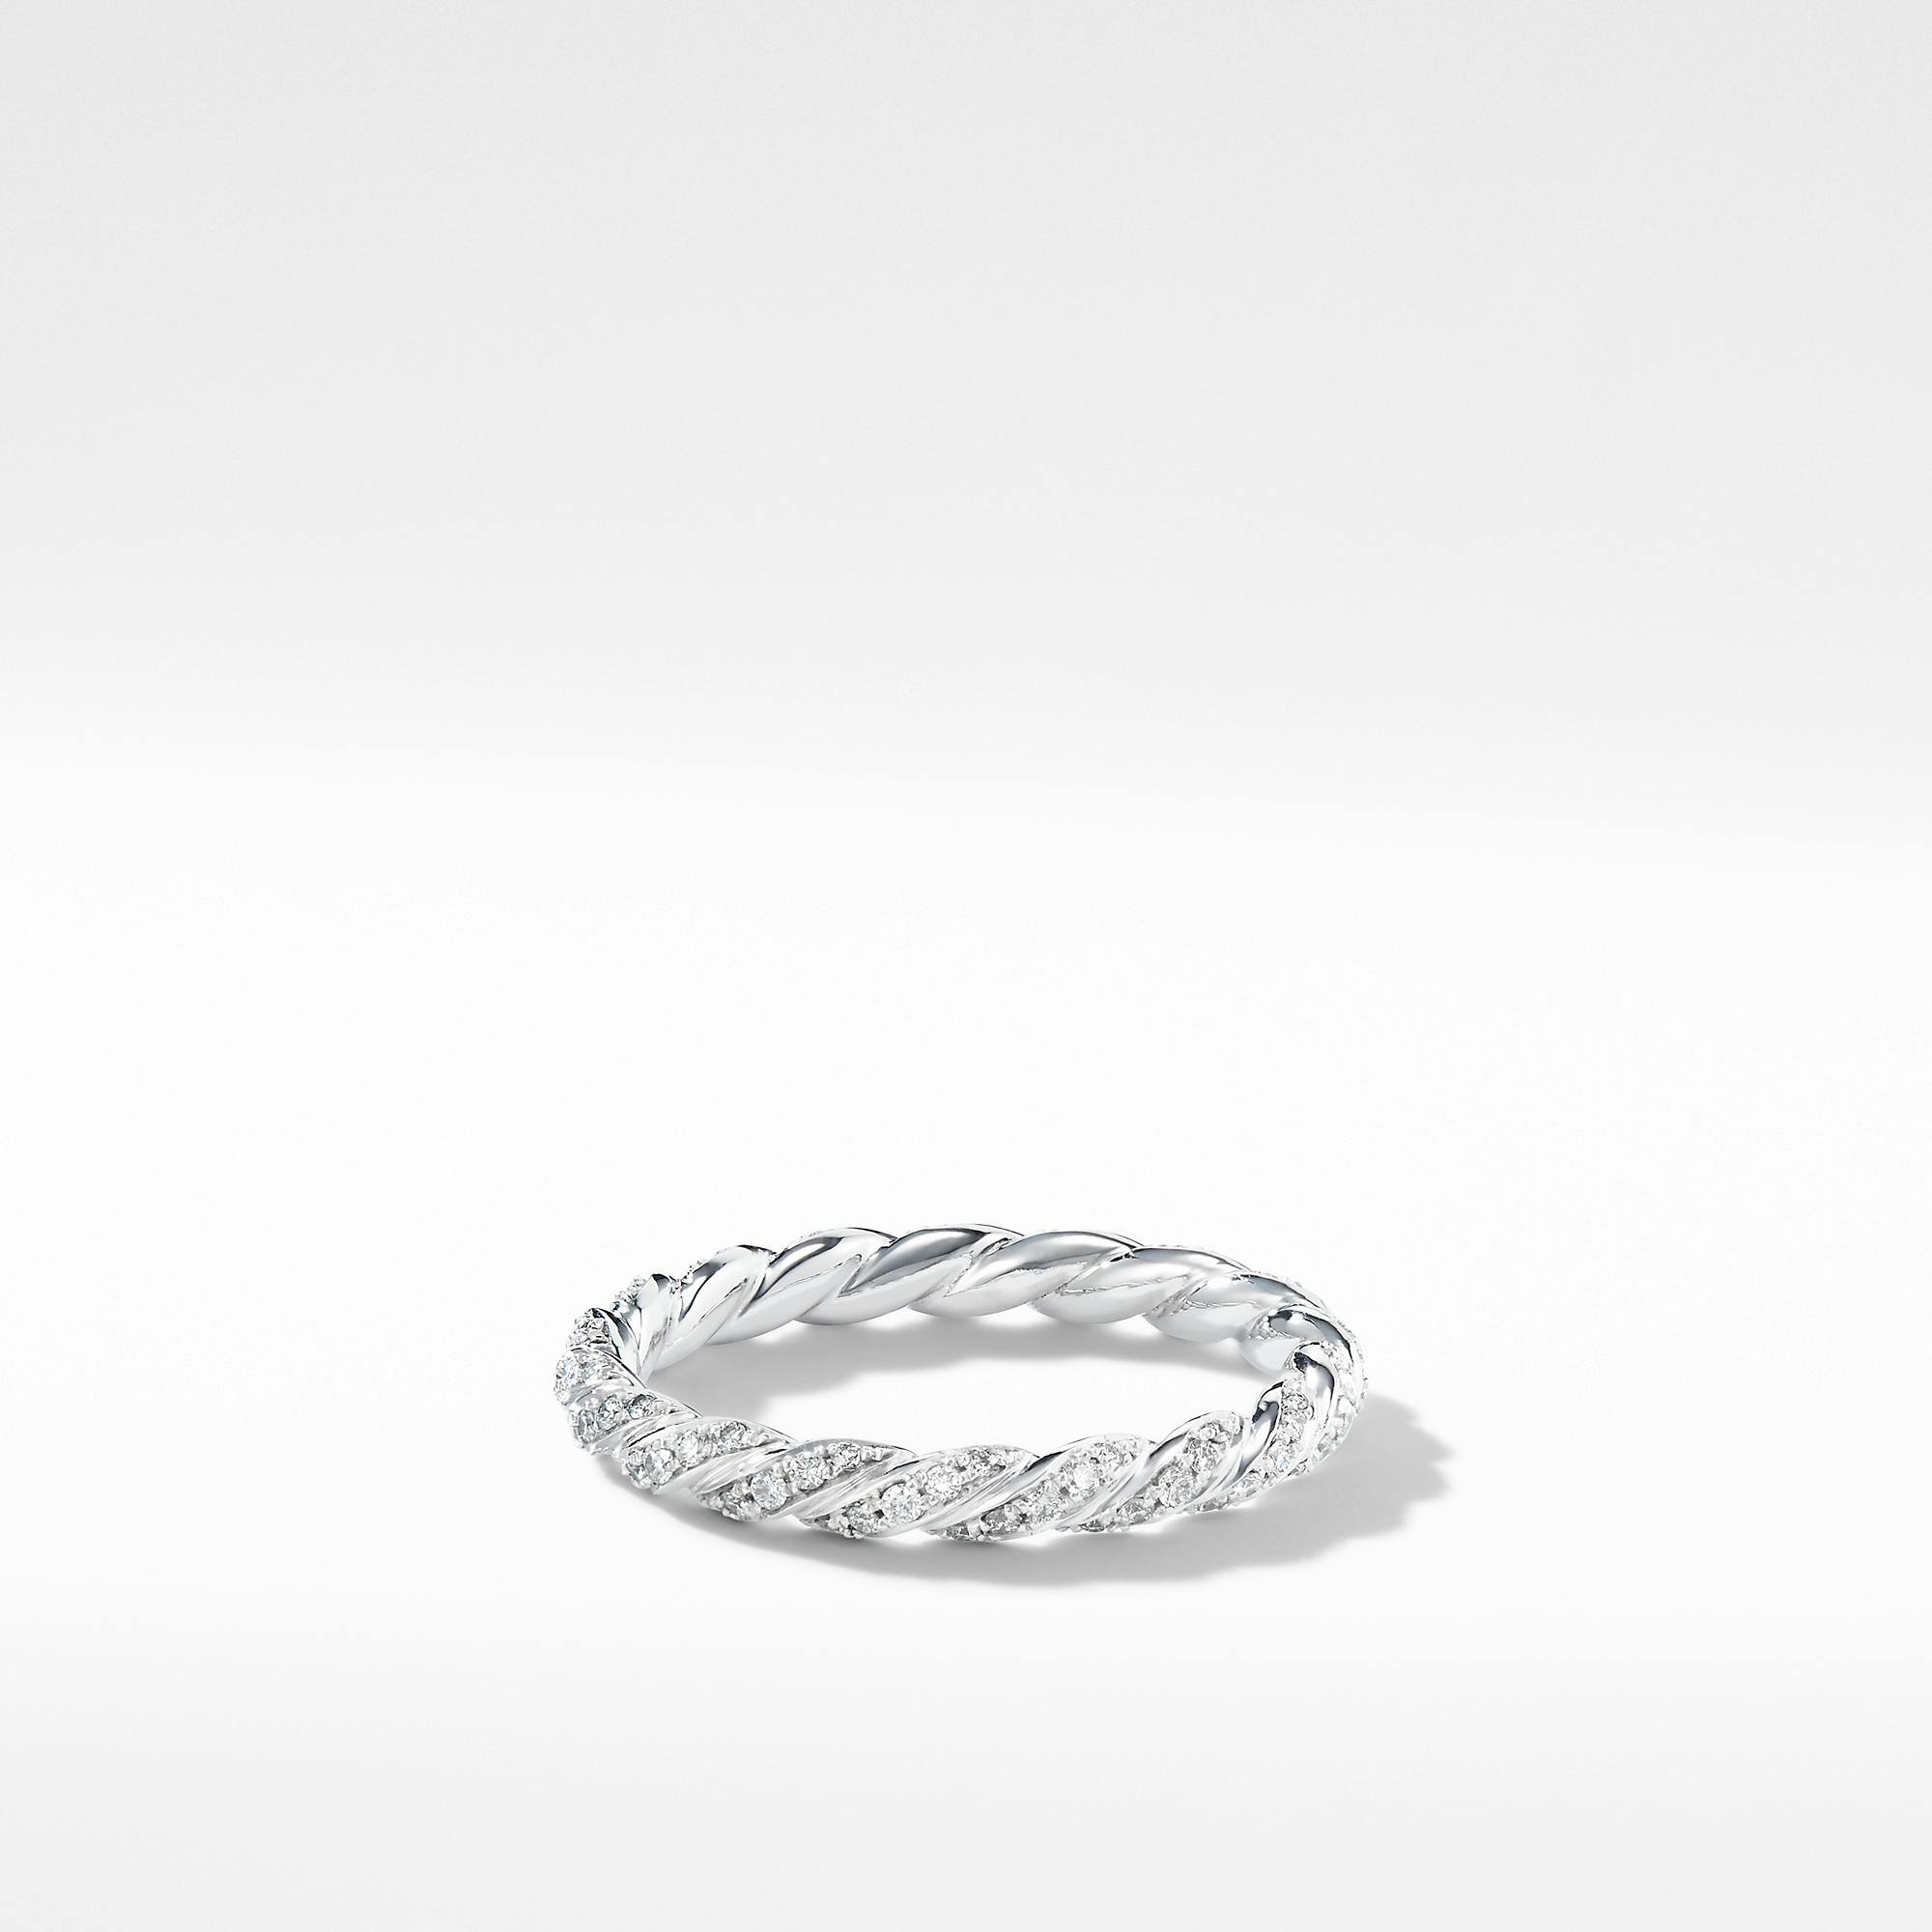 David Yurman Paveflex Ring with Diamonds in 18K White Gold, 2.7mm